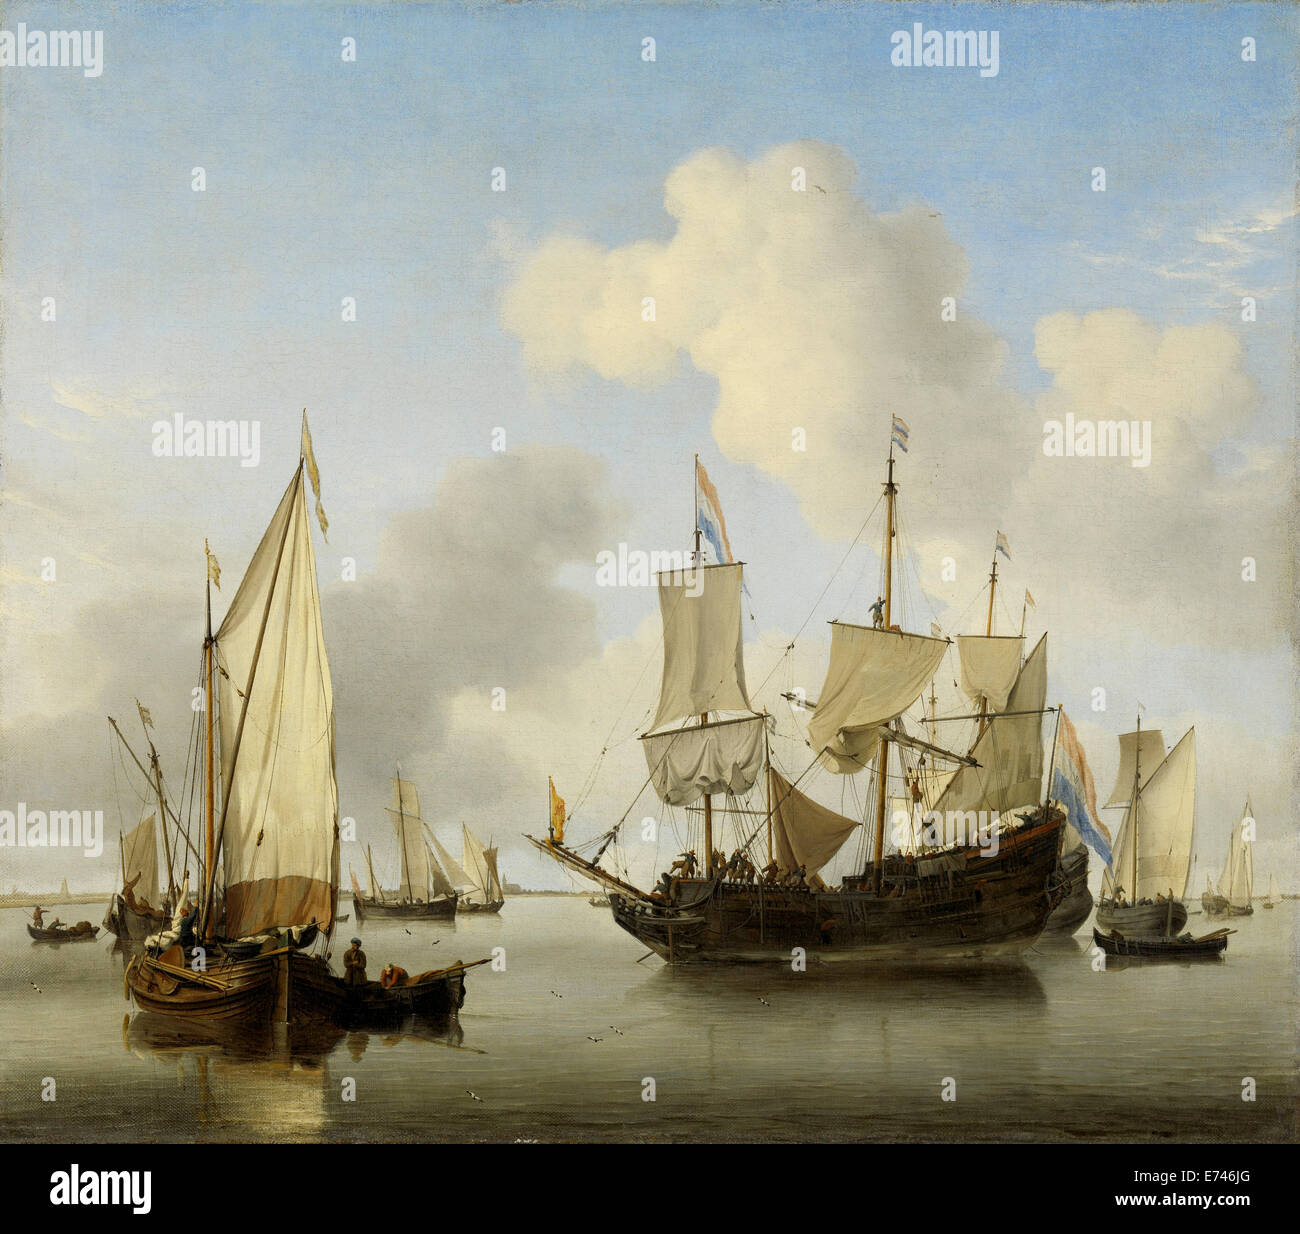 Ships anchor off the coast - by Willem van de Velde, 1660 Stock Photo